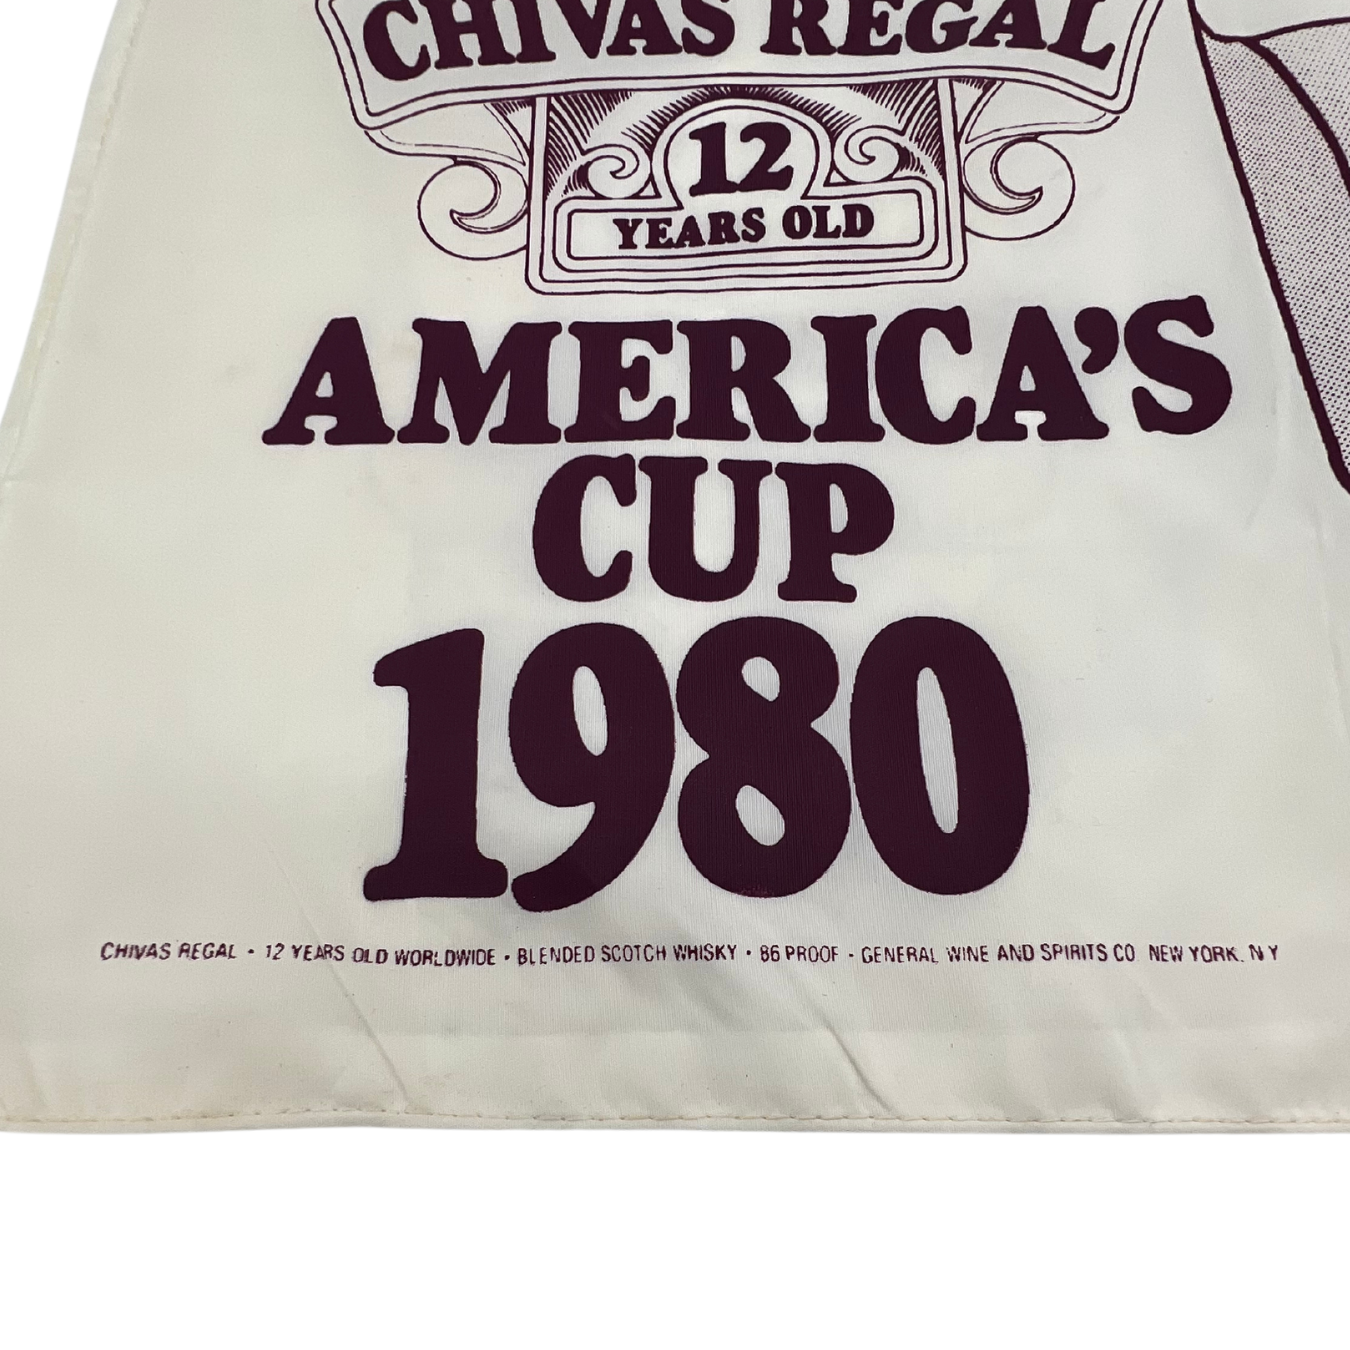 1980 Chivas Regal America's Cup burgee